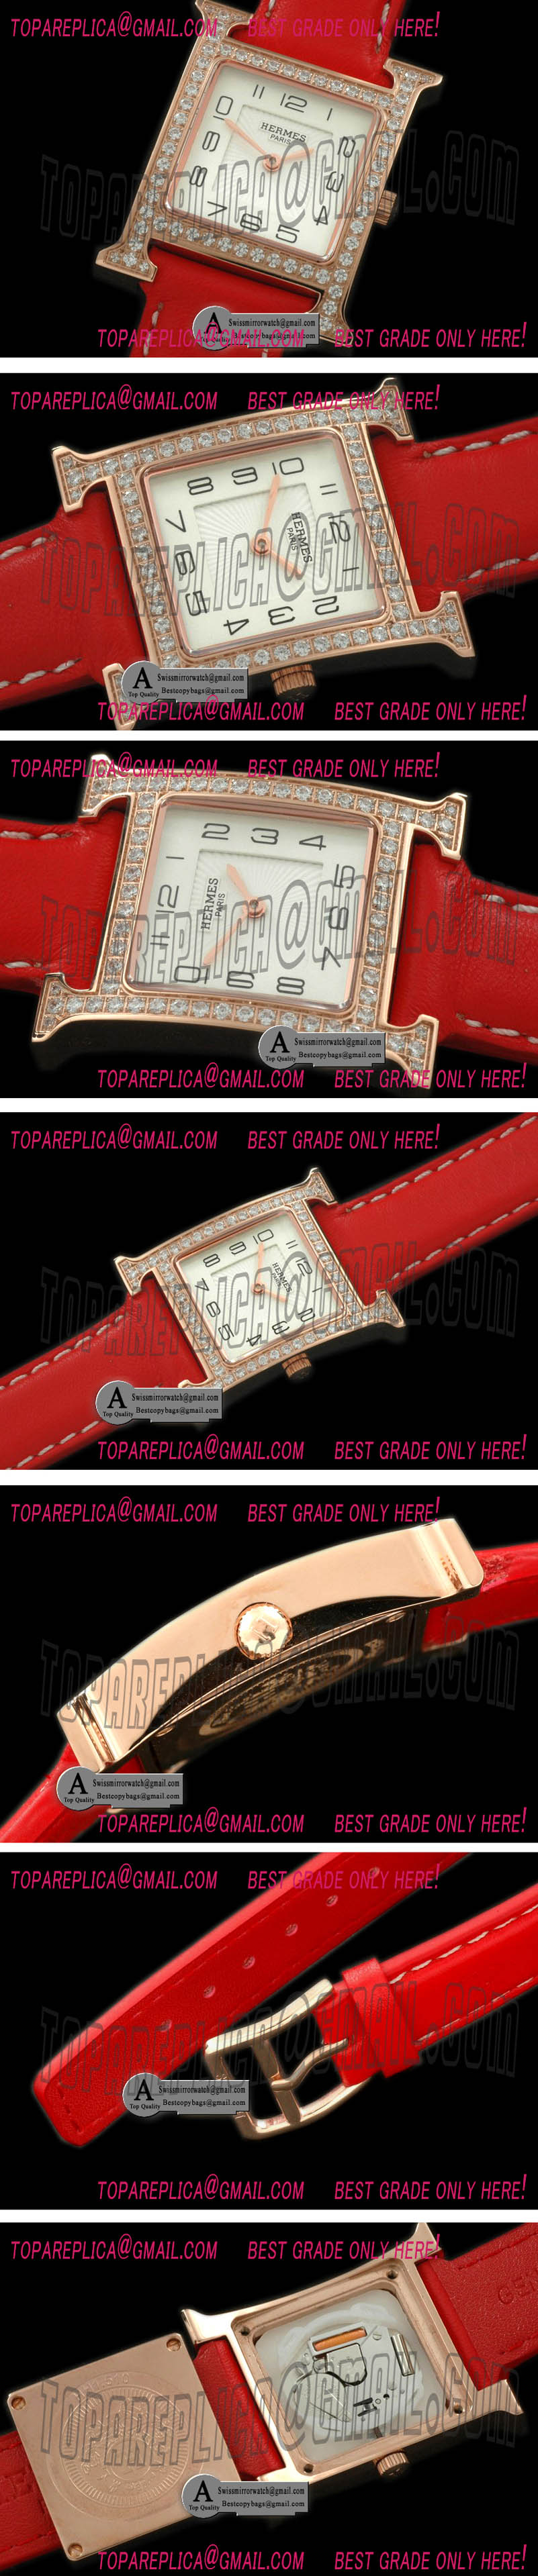 Hermes H Hour Rose Gold/Leather/Diamond White Swiss Quartz Replica Watches